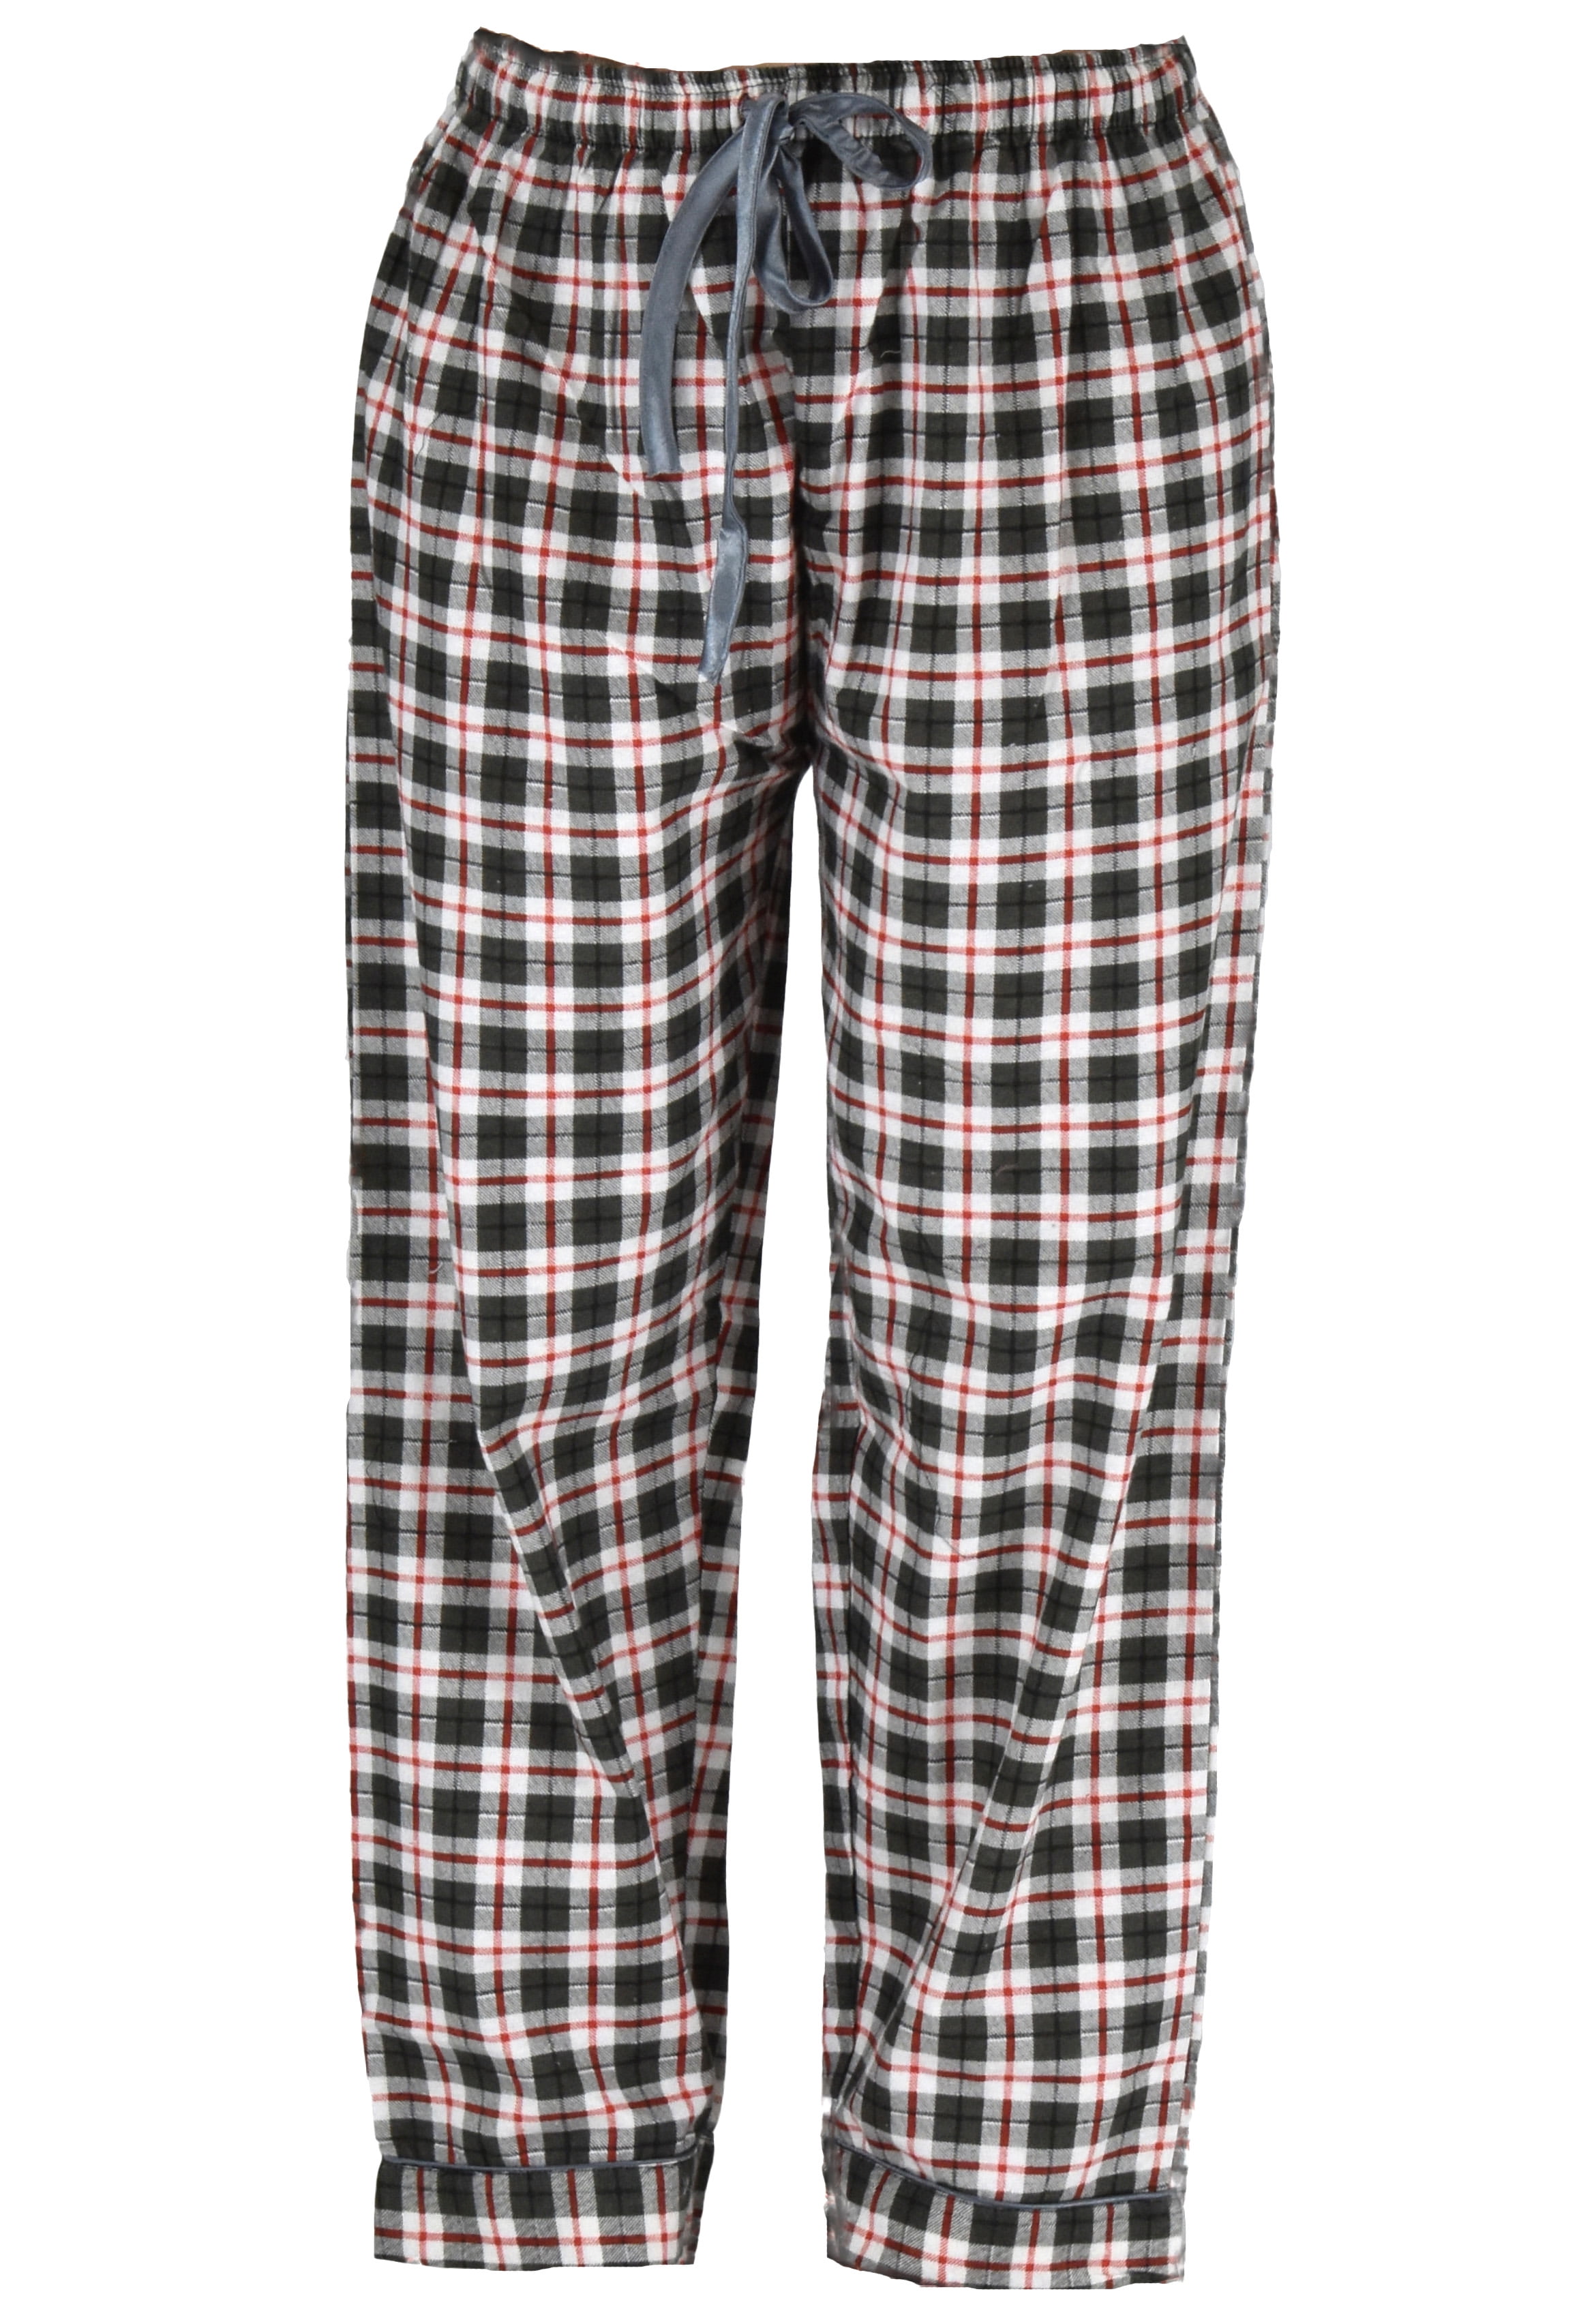 Up2date Fashion's Men's 100% Cotton Flannel Lounge / Sleep Pants ...